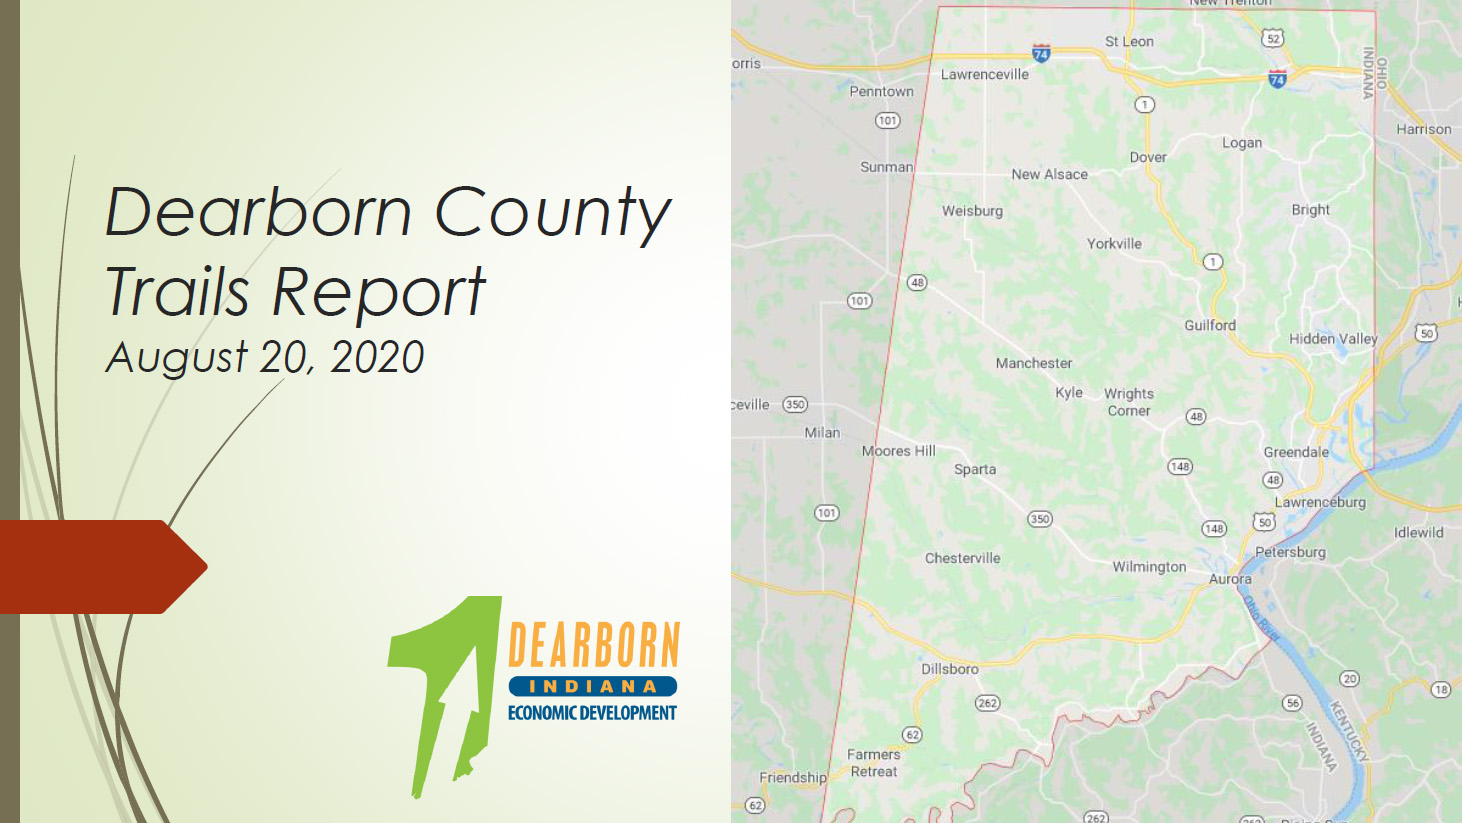 Dearborn County Trails Report presentation slides